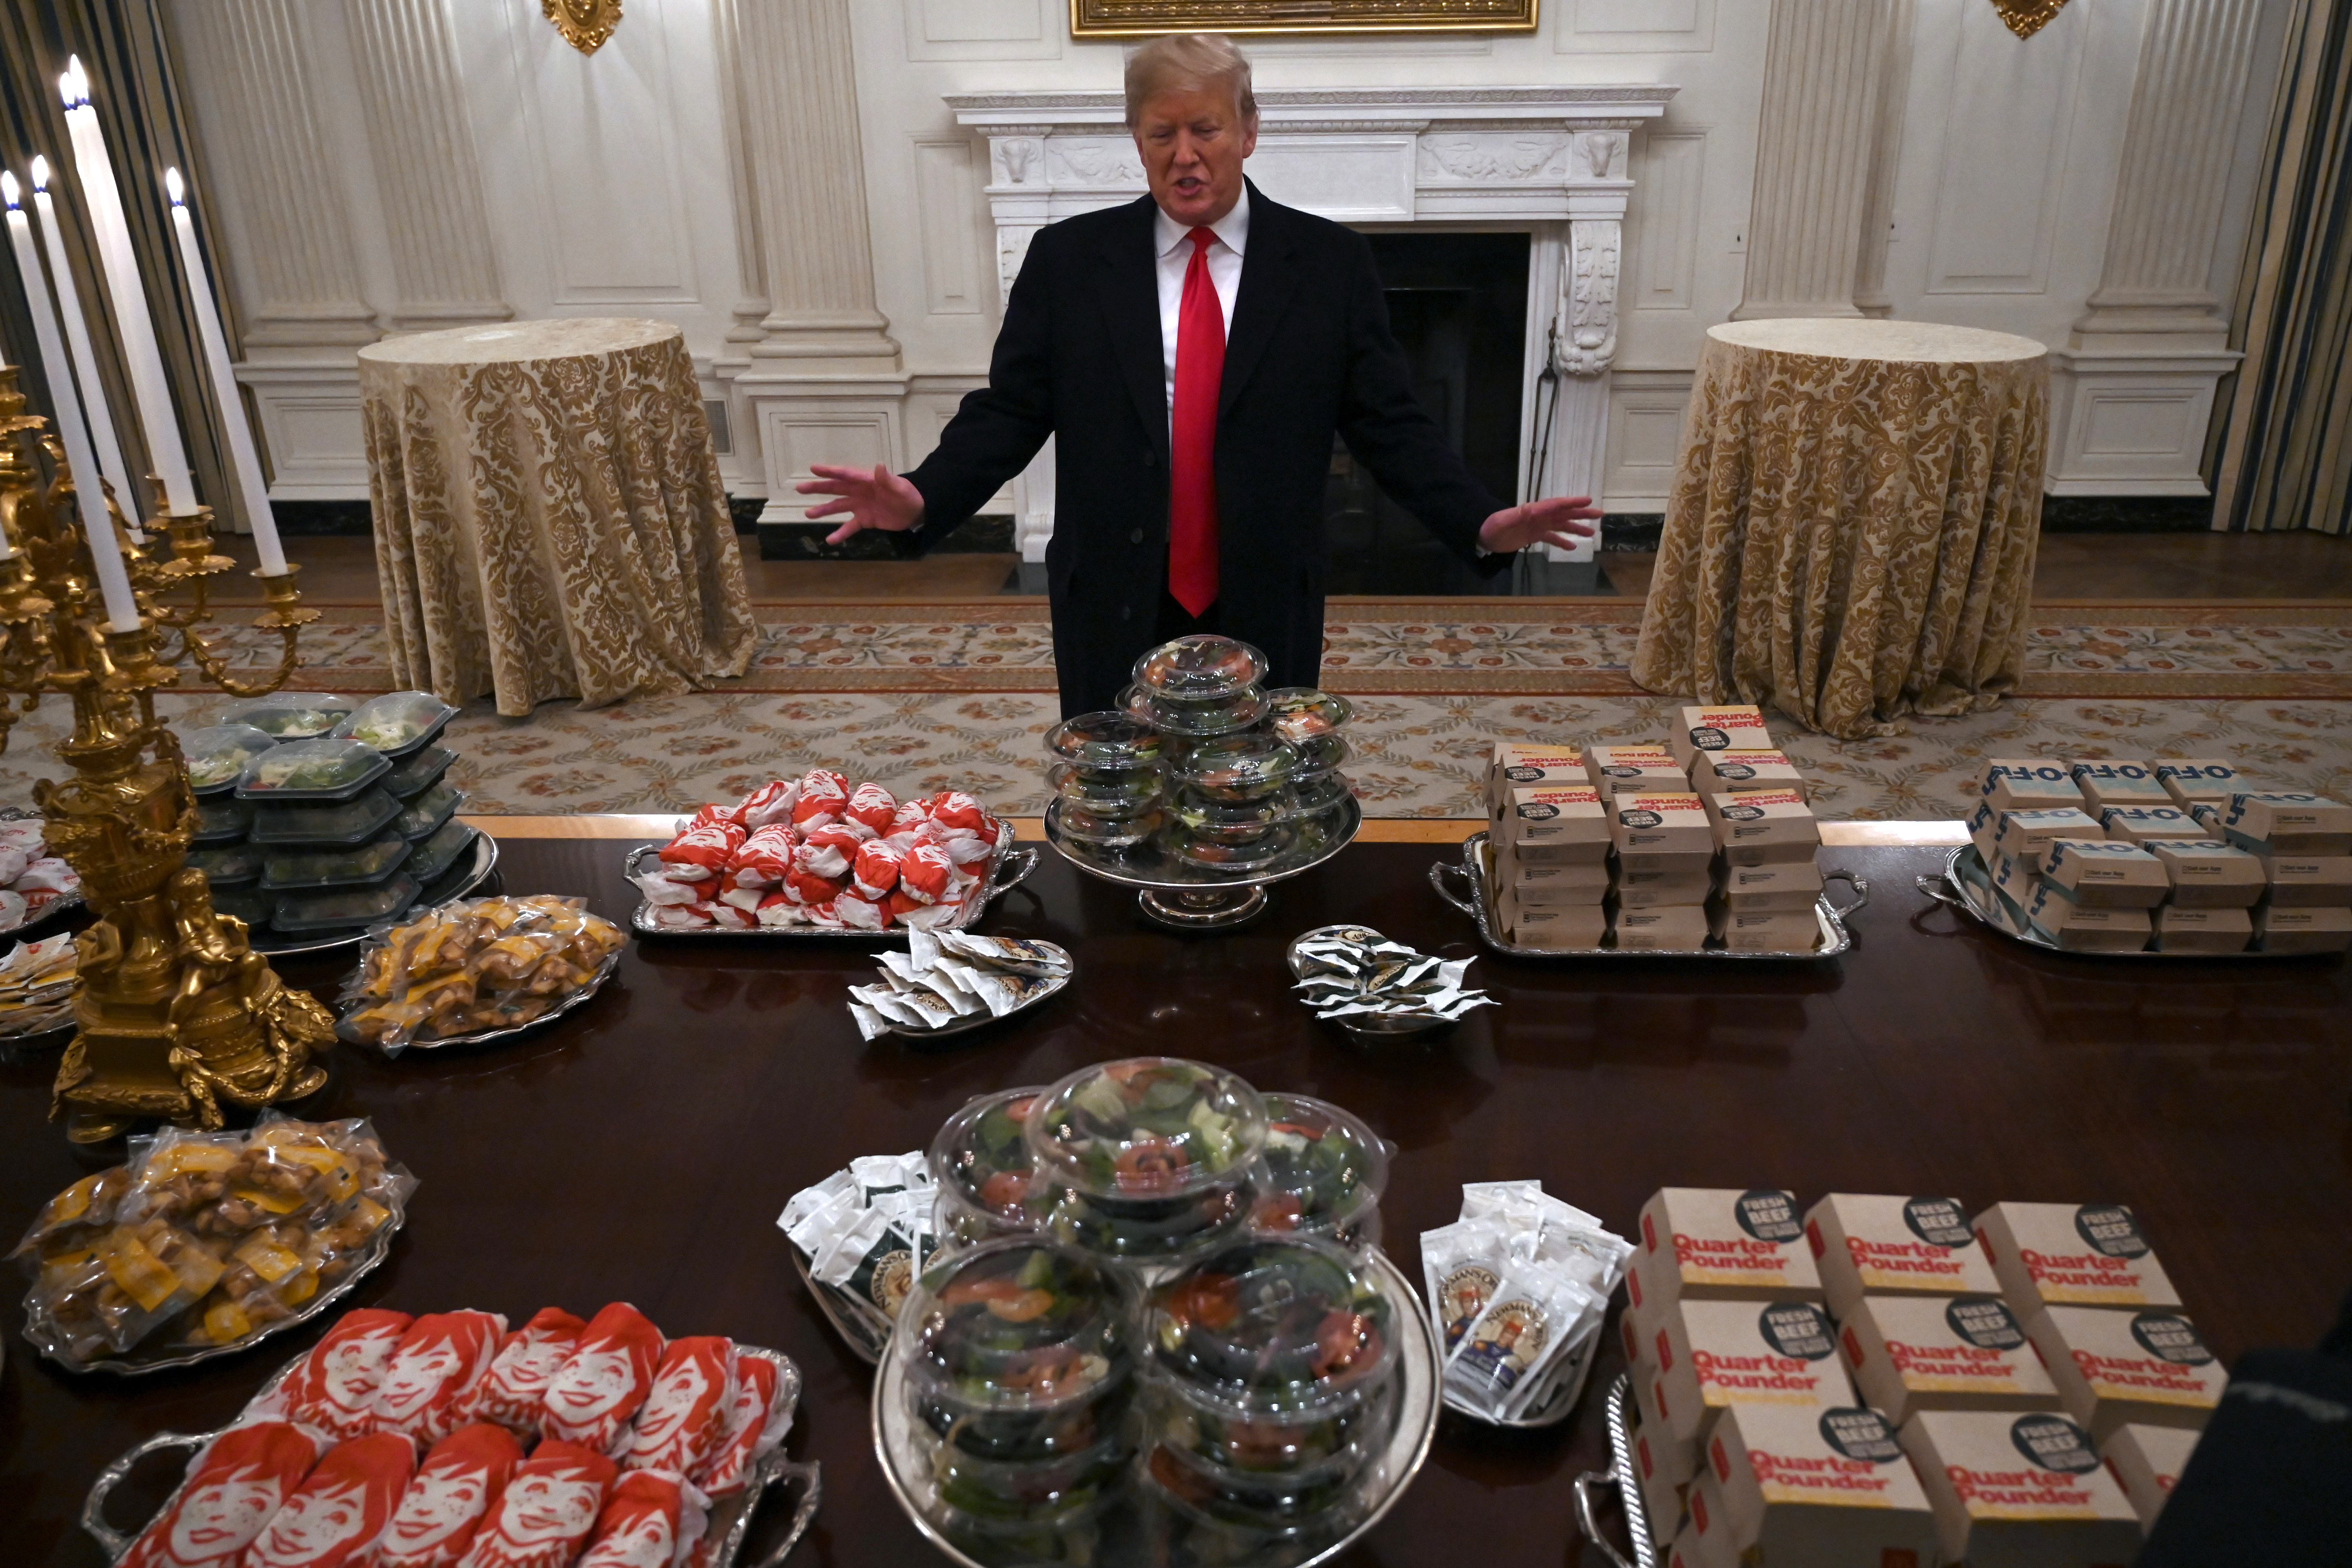 Trump's burger-fest brings roasting from late-night TV hosts